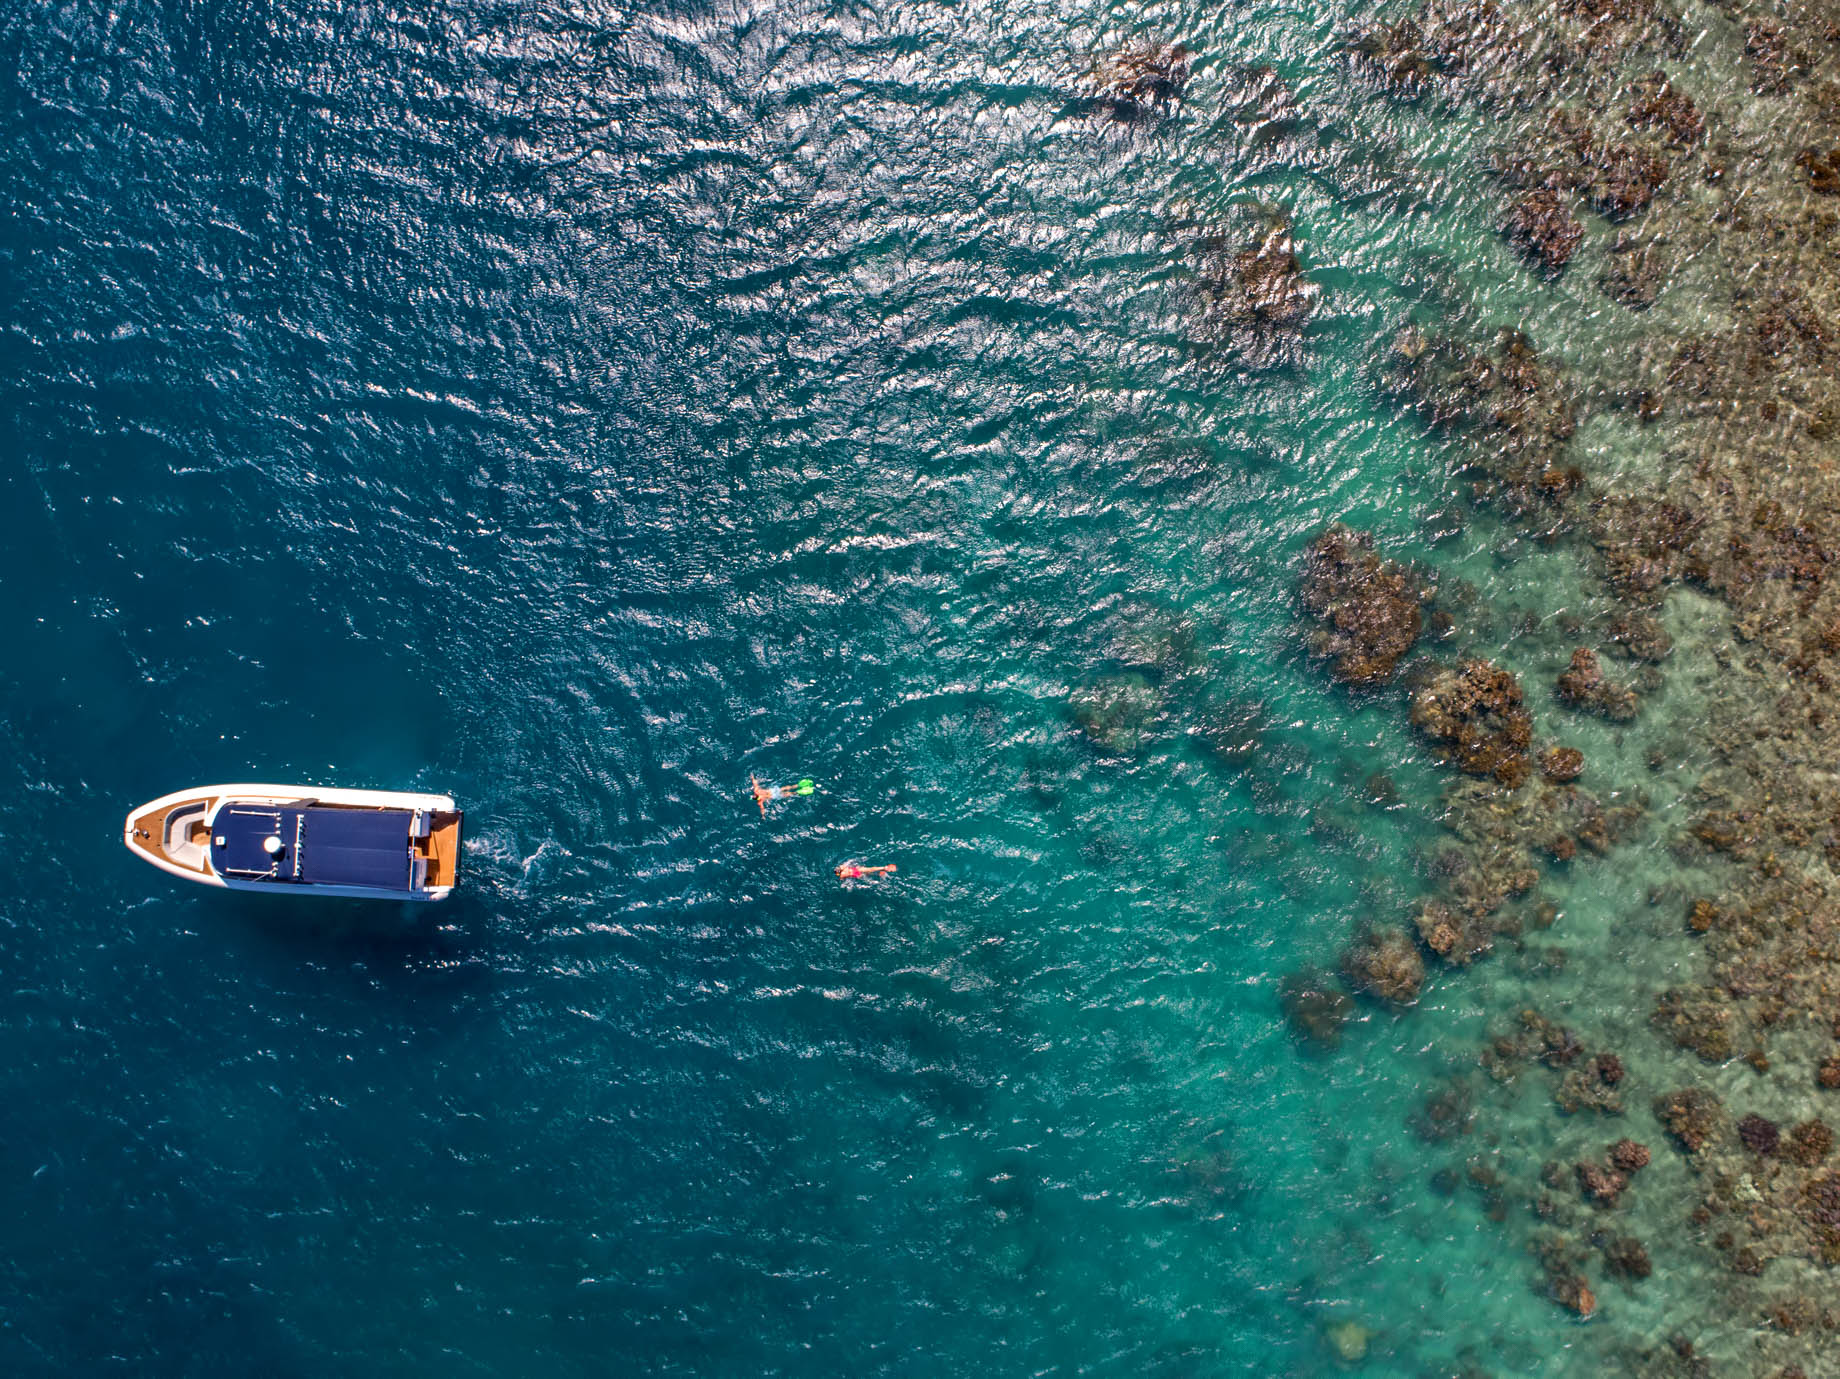 InterContinental Hayman Island Resort - Whitsunday Islands, Australia - Private Corel Reef Snorkeling Tour